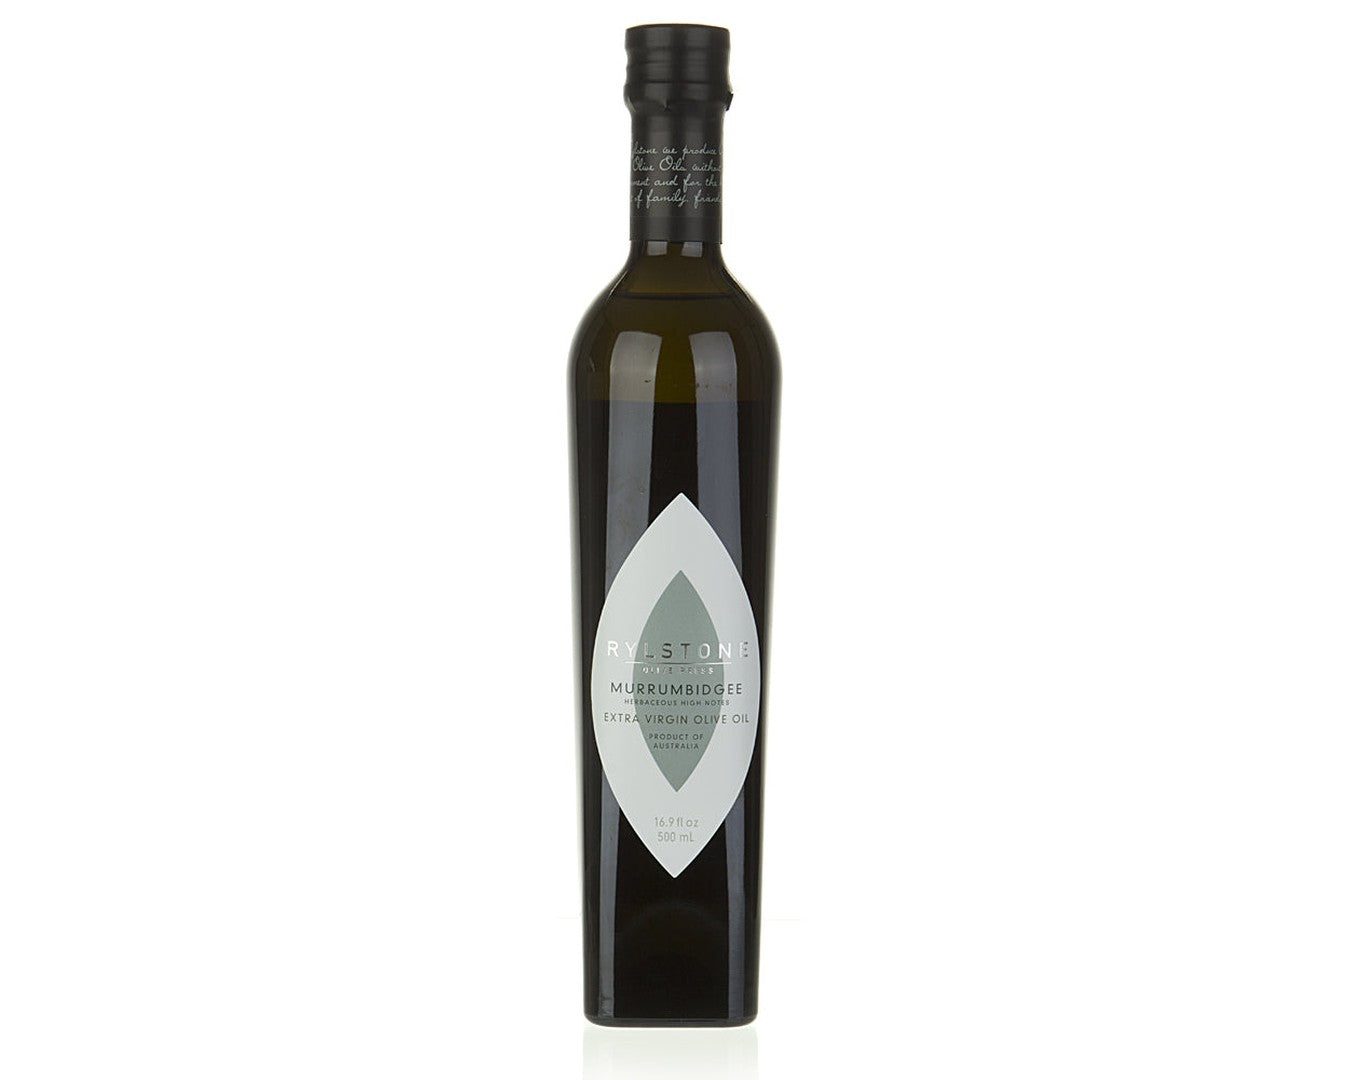 Rylstone Murrumbidgee Extra Virgin Olive Oil 500ml-Olive Oil-The Local Basket